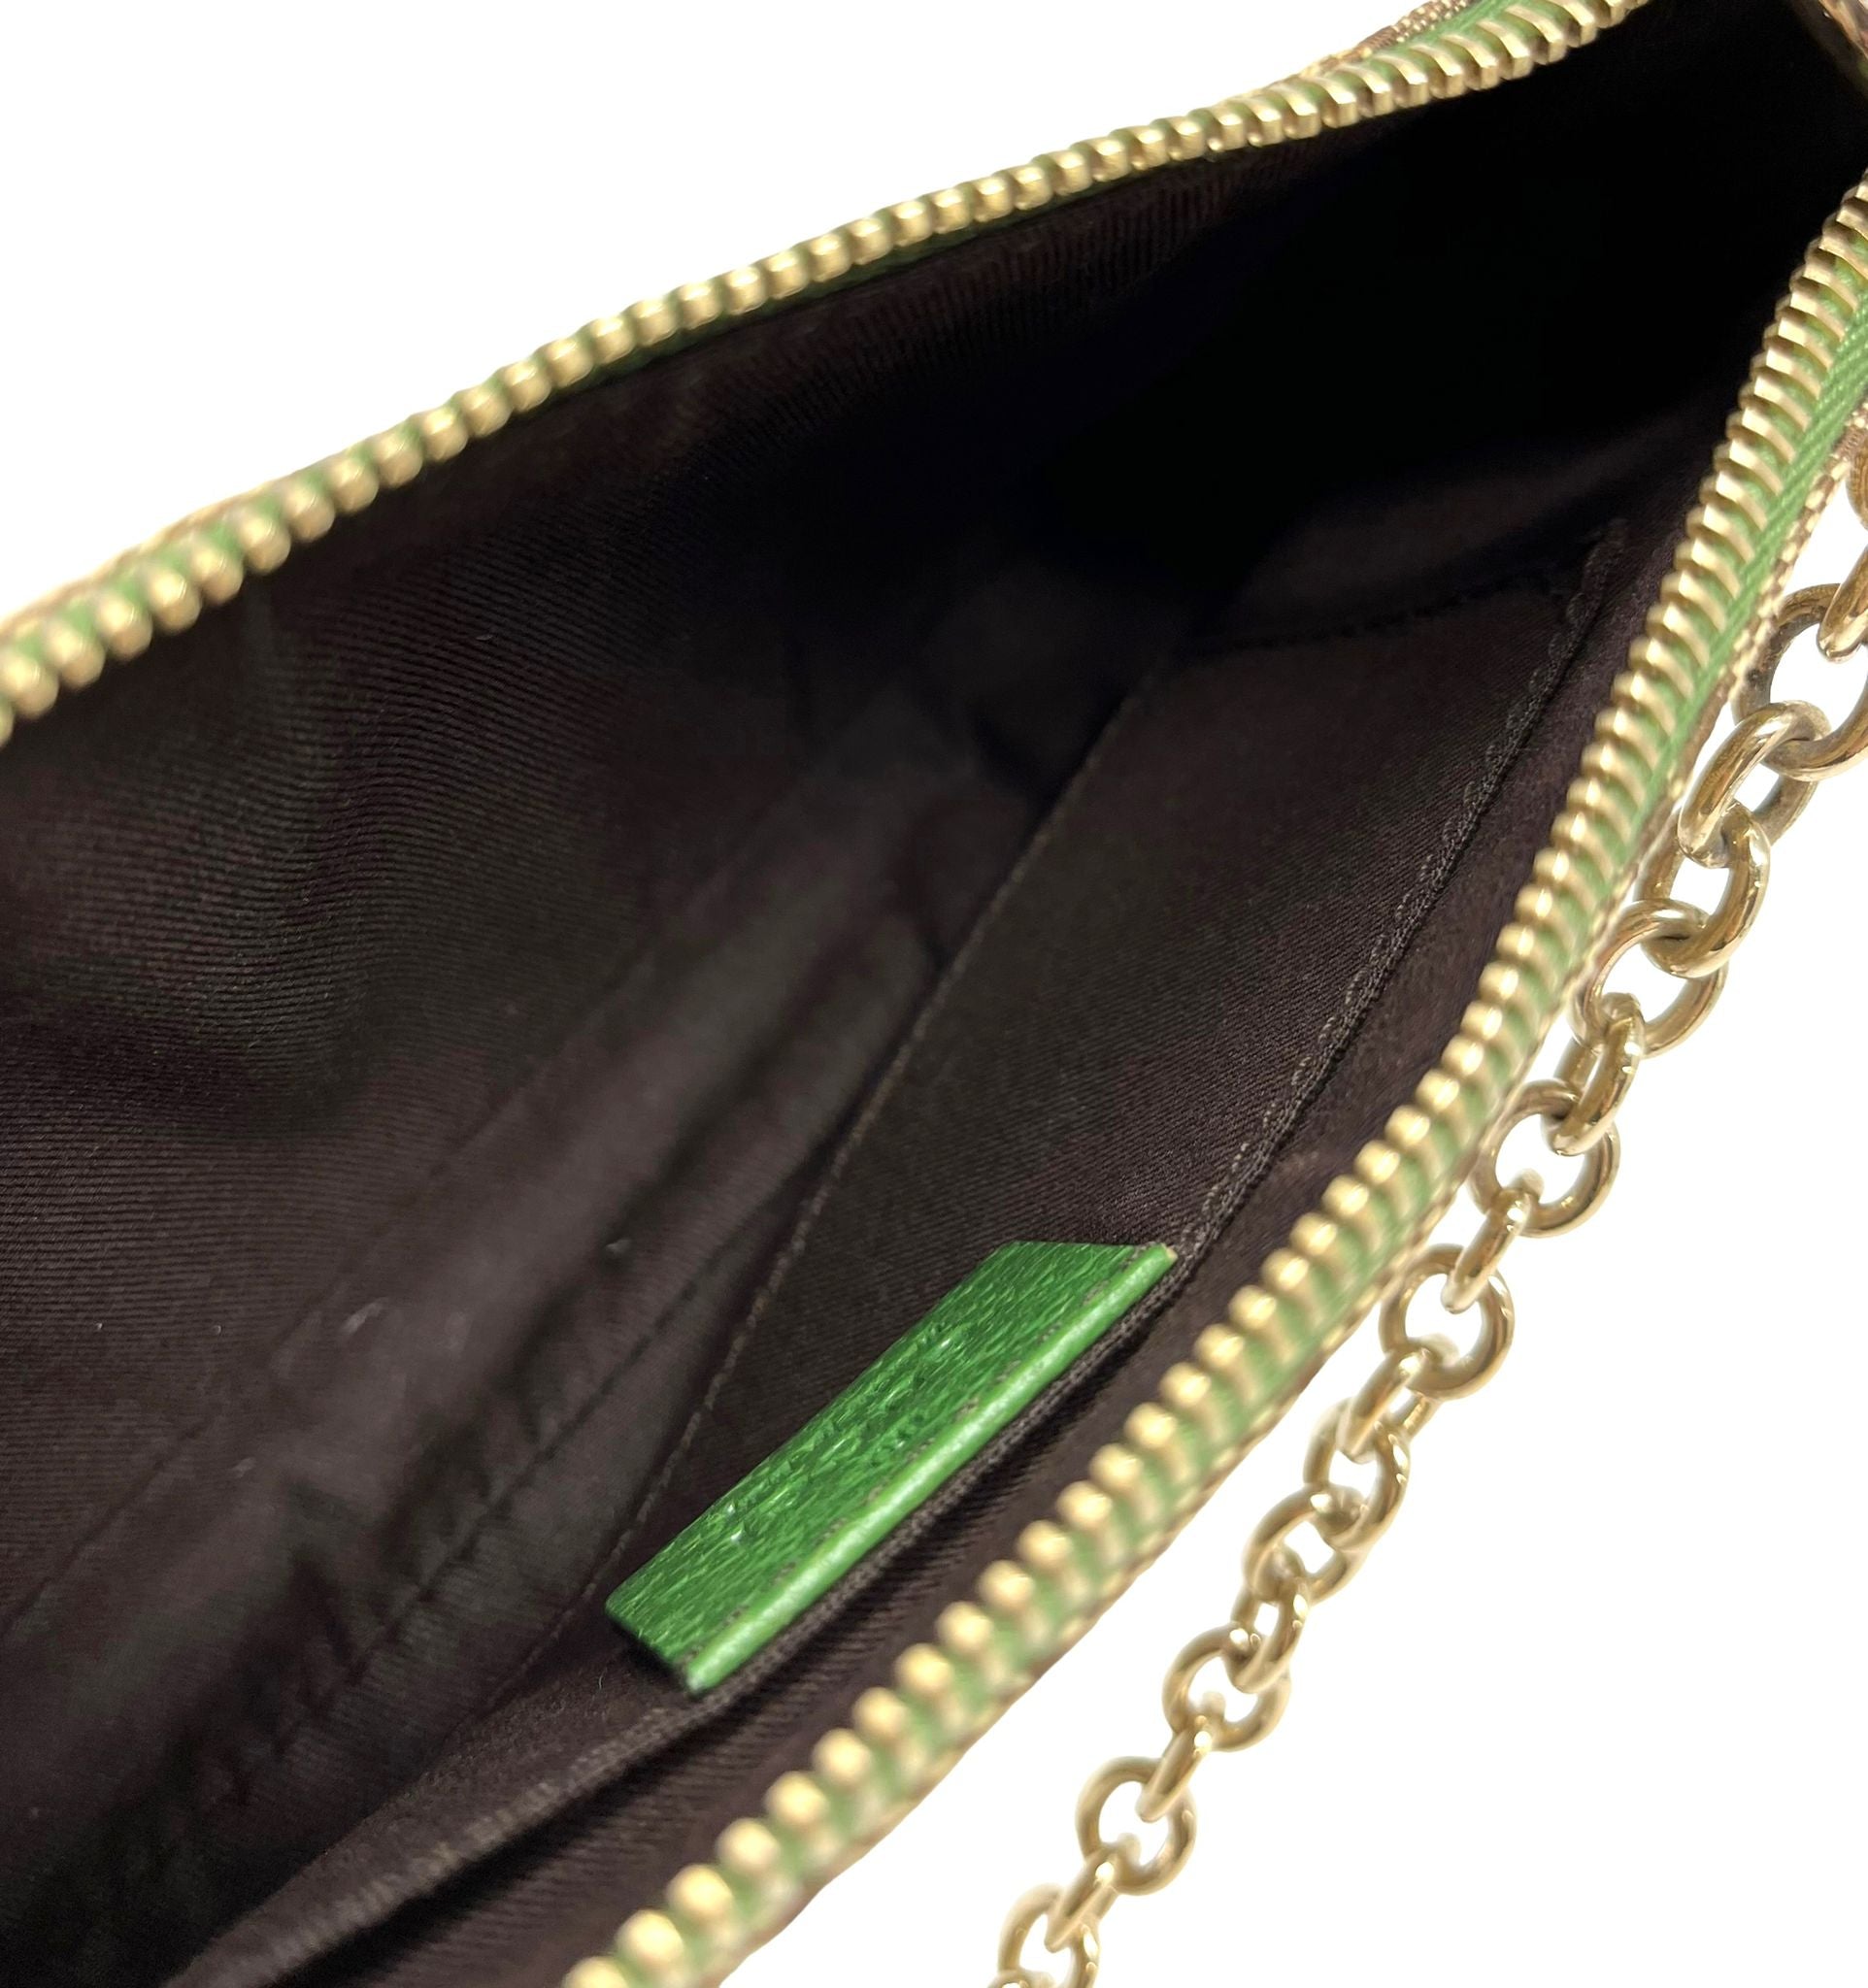 Gucci Green Mini Chain Shoulder Bag